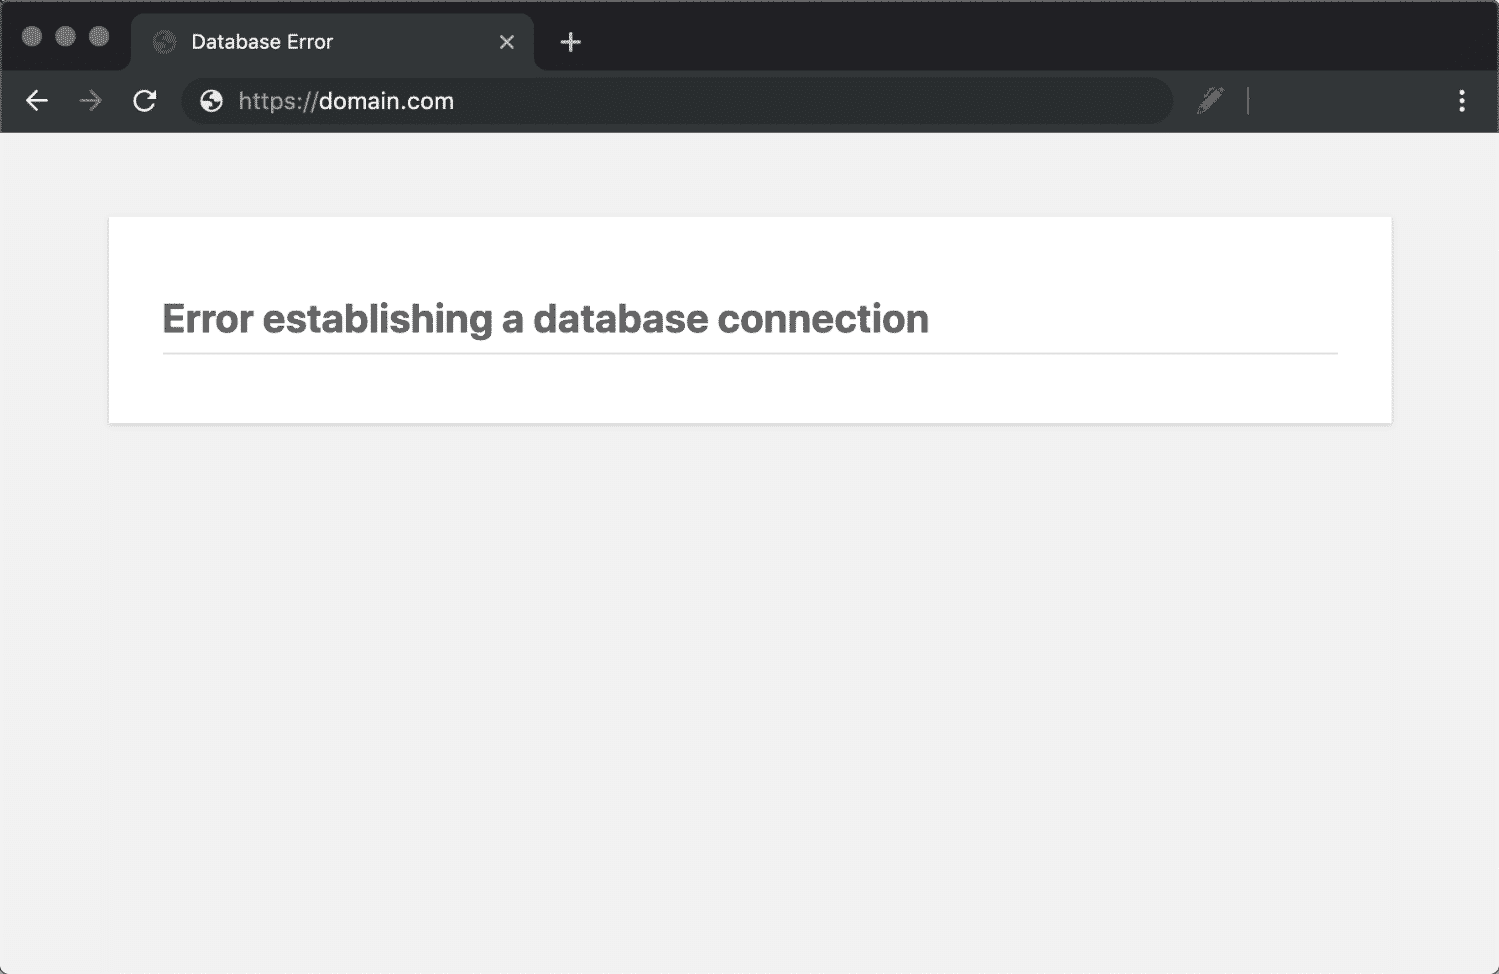 Messaggio "Error establishing a database connection" in Chrome